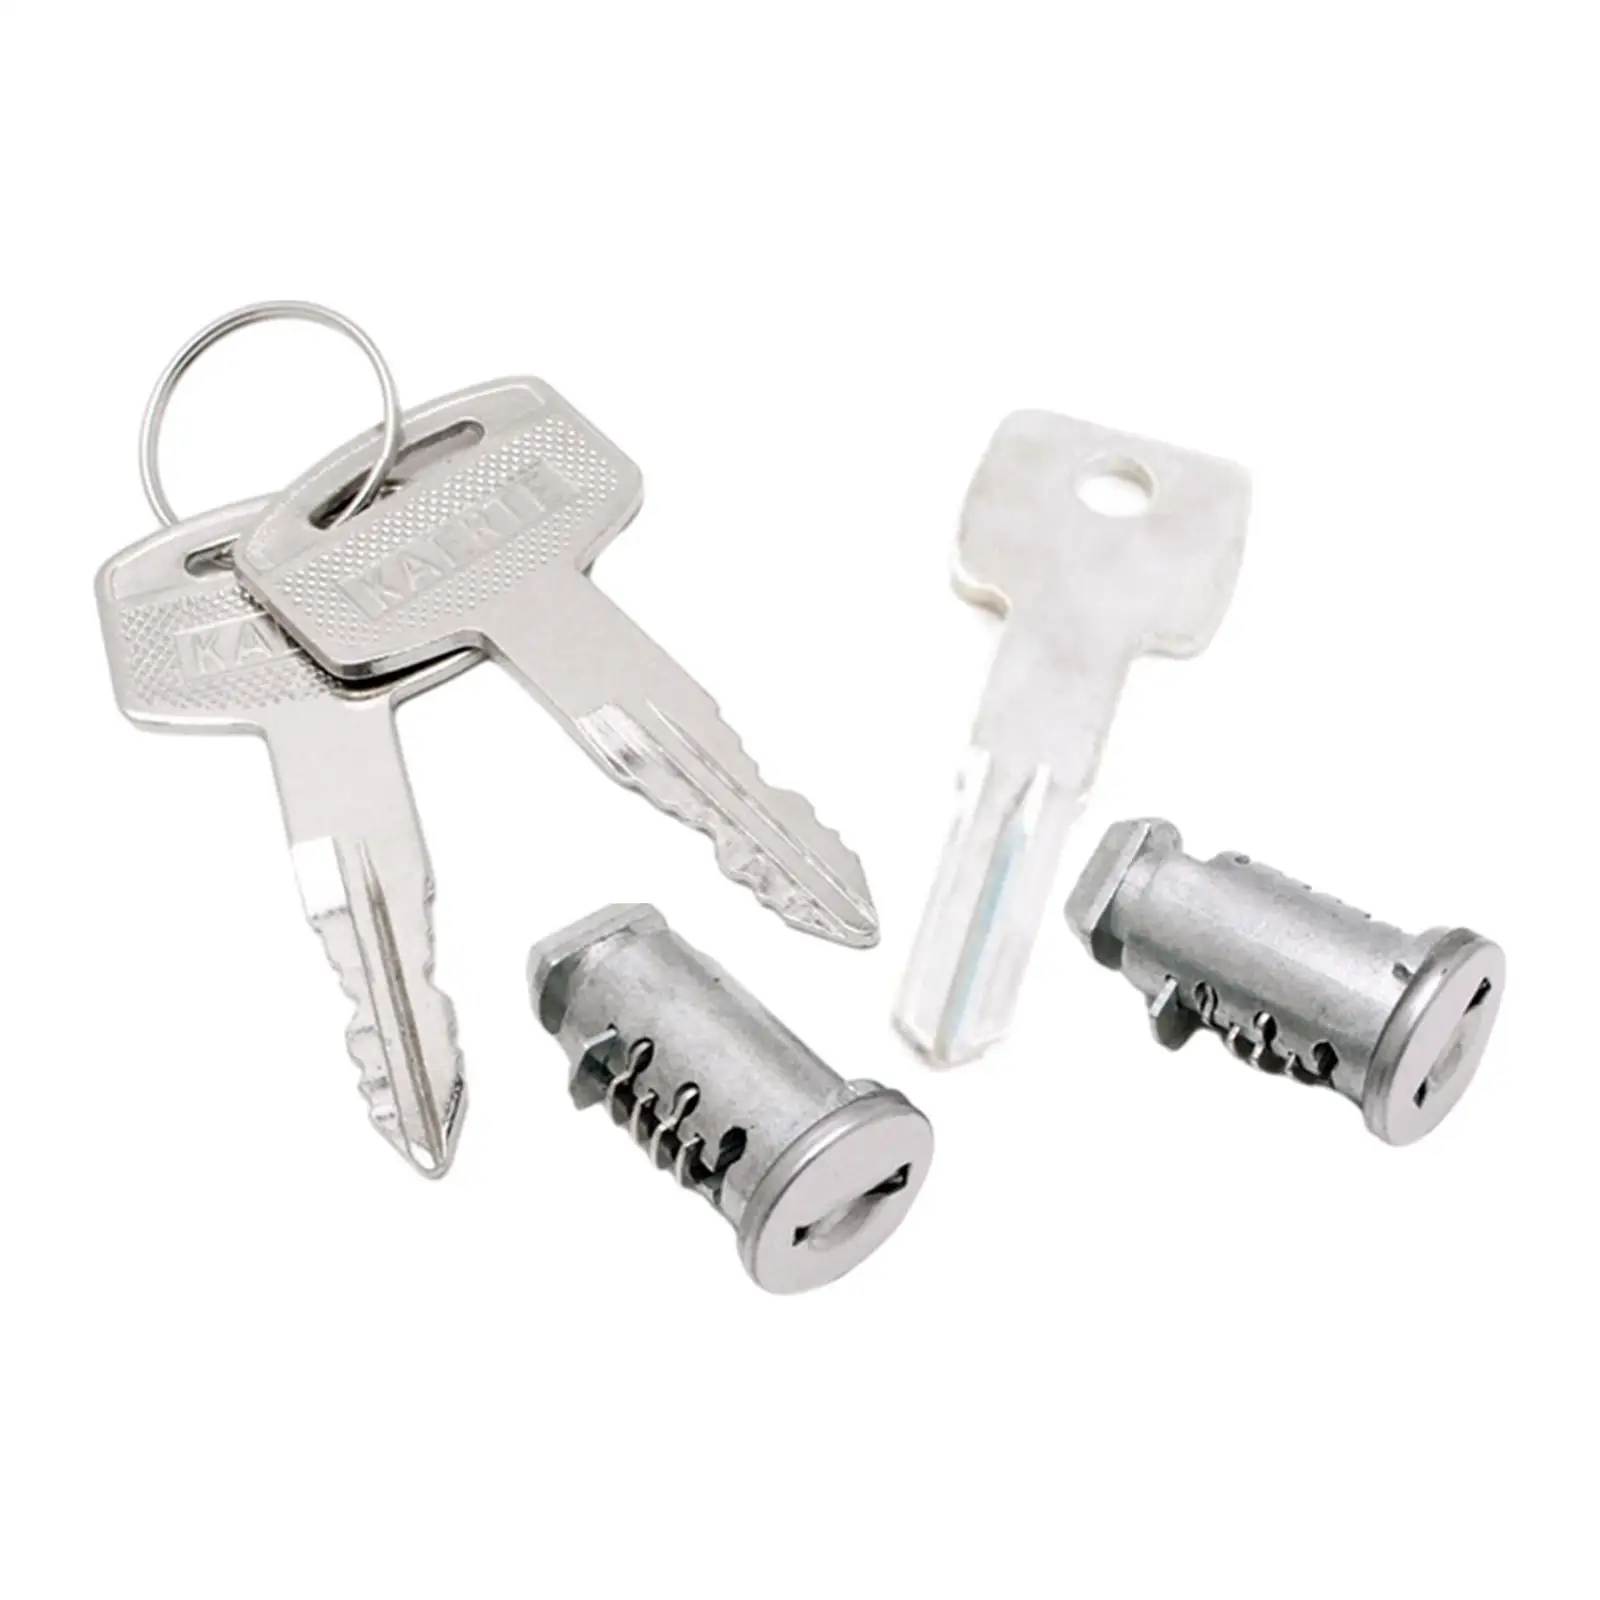 2Pcs Lock Cylinders for Car Racks System Detachable Professional Accessory Rooftop Cargo Rack Locks Cores Crossbar Locks